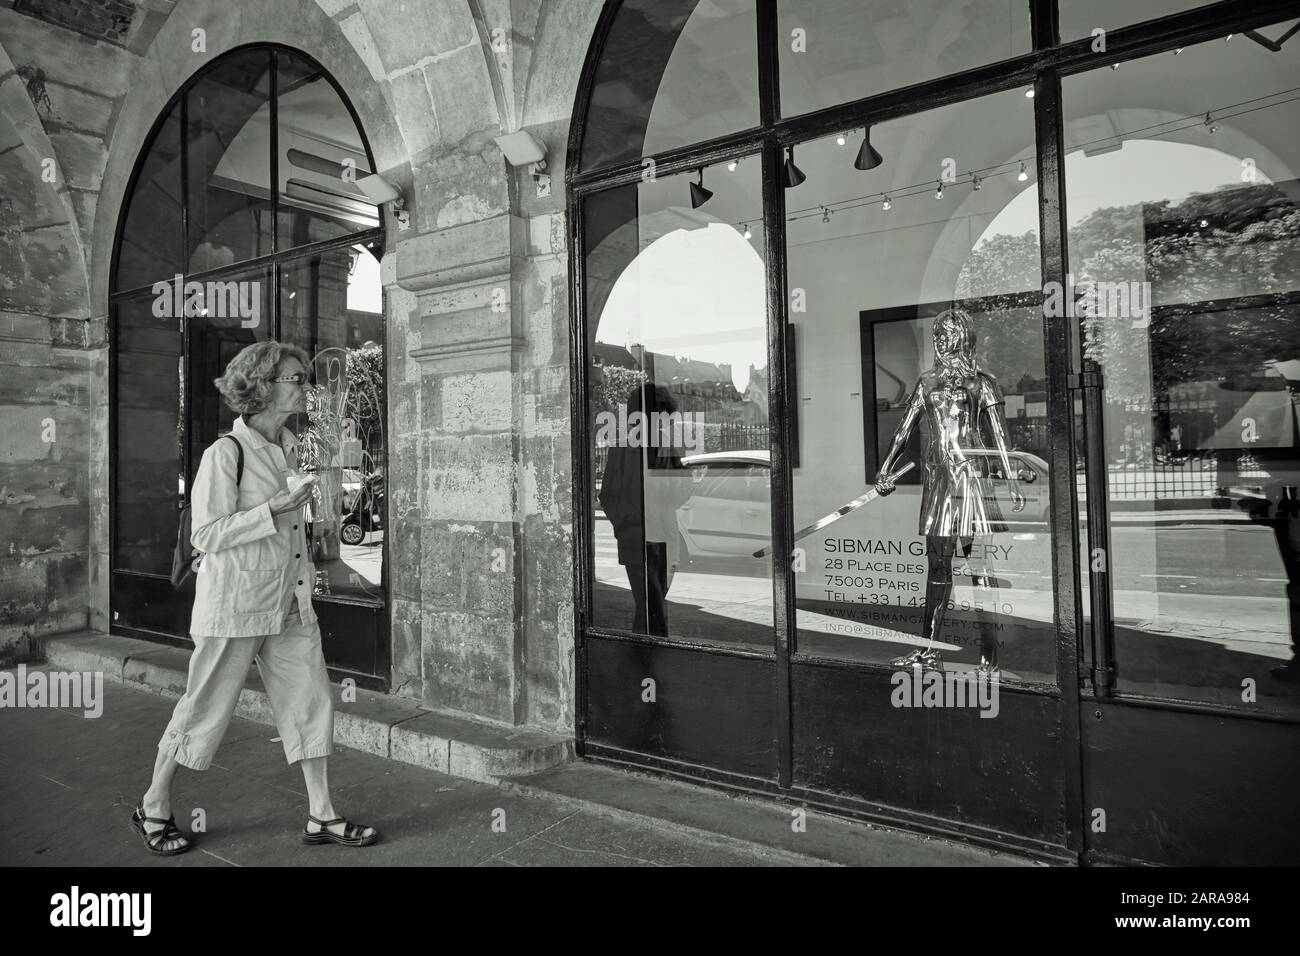 Sibman fine art gallery exterior, Paris, France, Europe Stock Photo